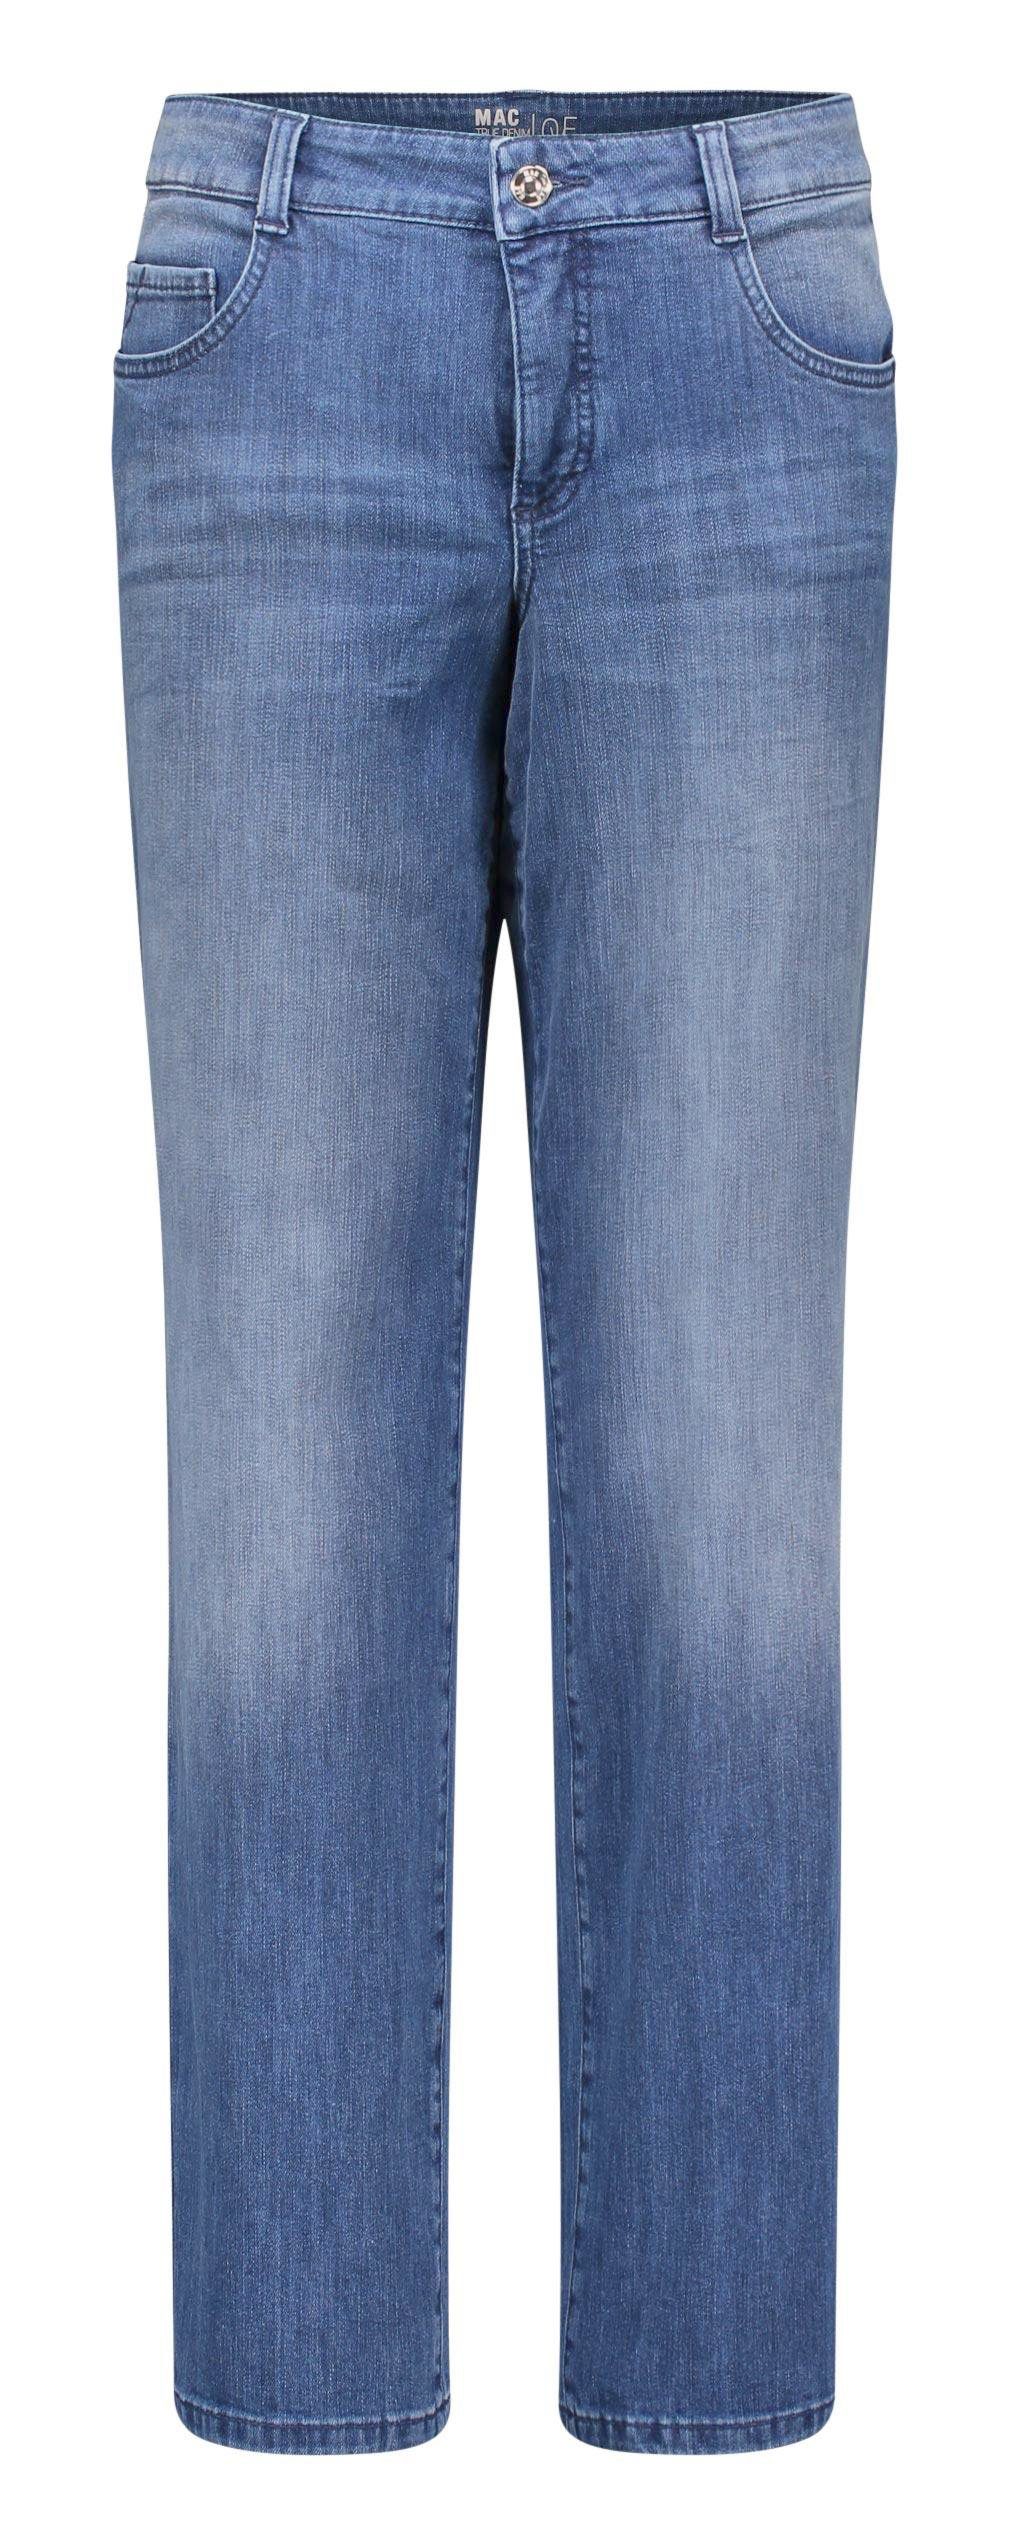 MAC Stretch-Jeans MAC GRACIA mid blue wash 5381-90-0392 D452